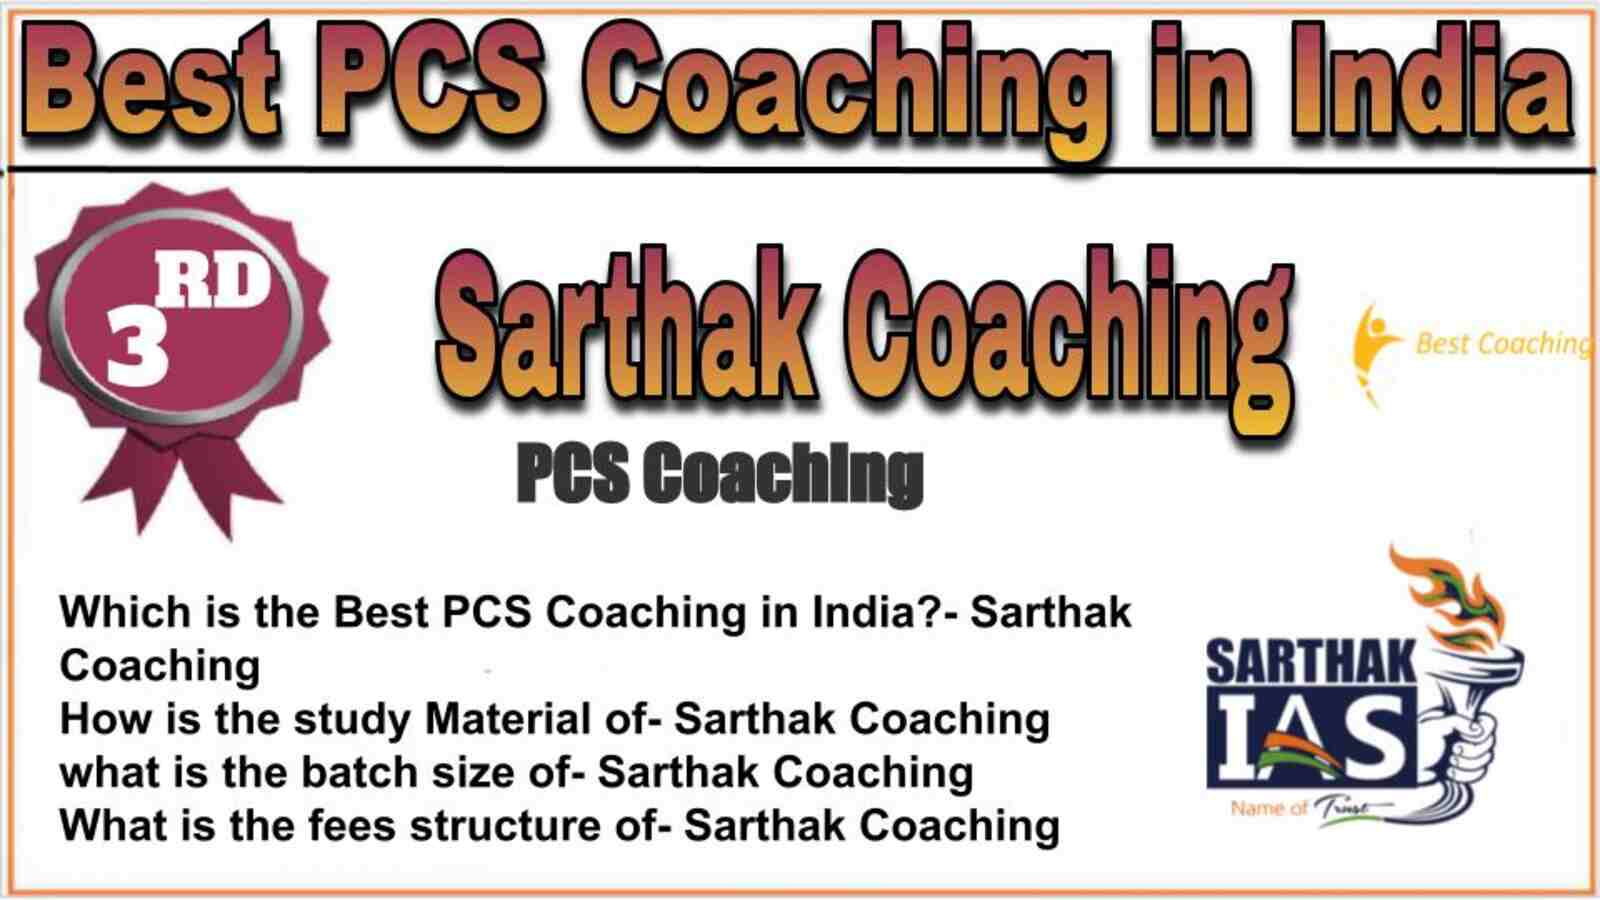 Rank 3 best PCS coaching in India